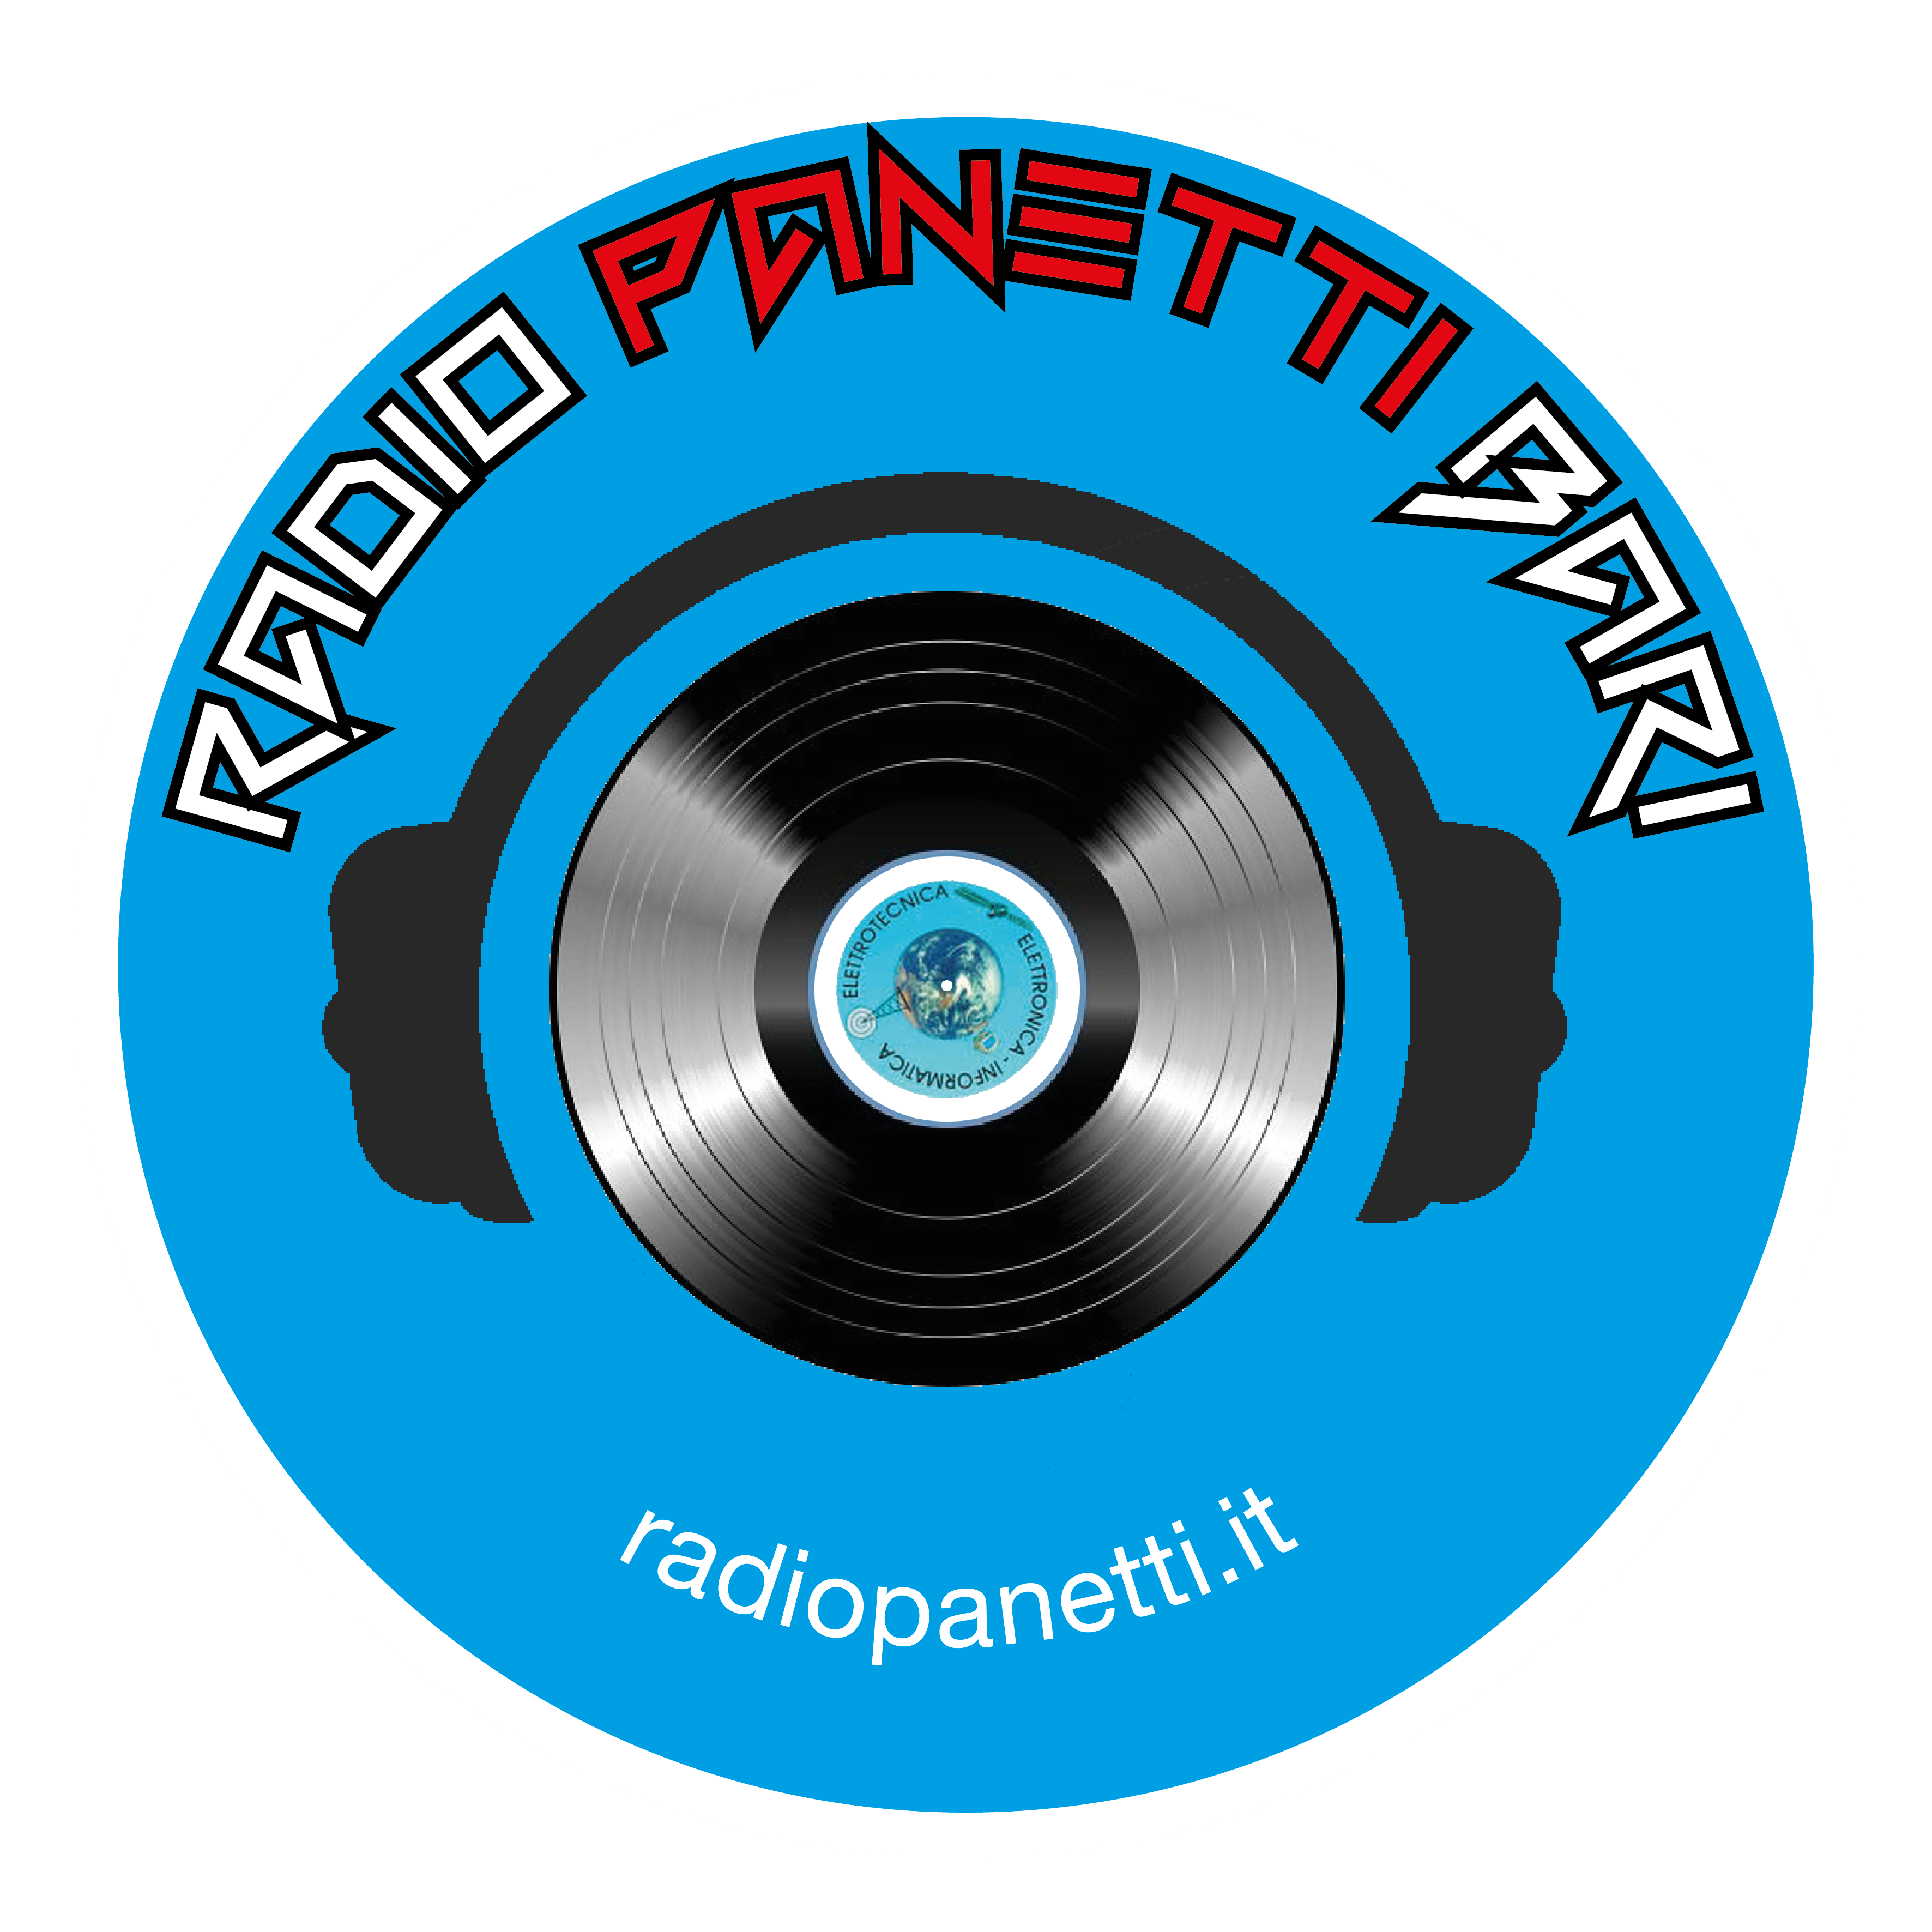 RadioPanetti Bari